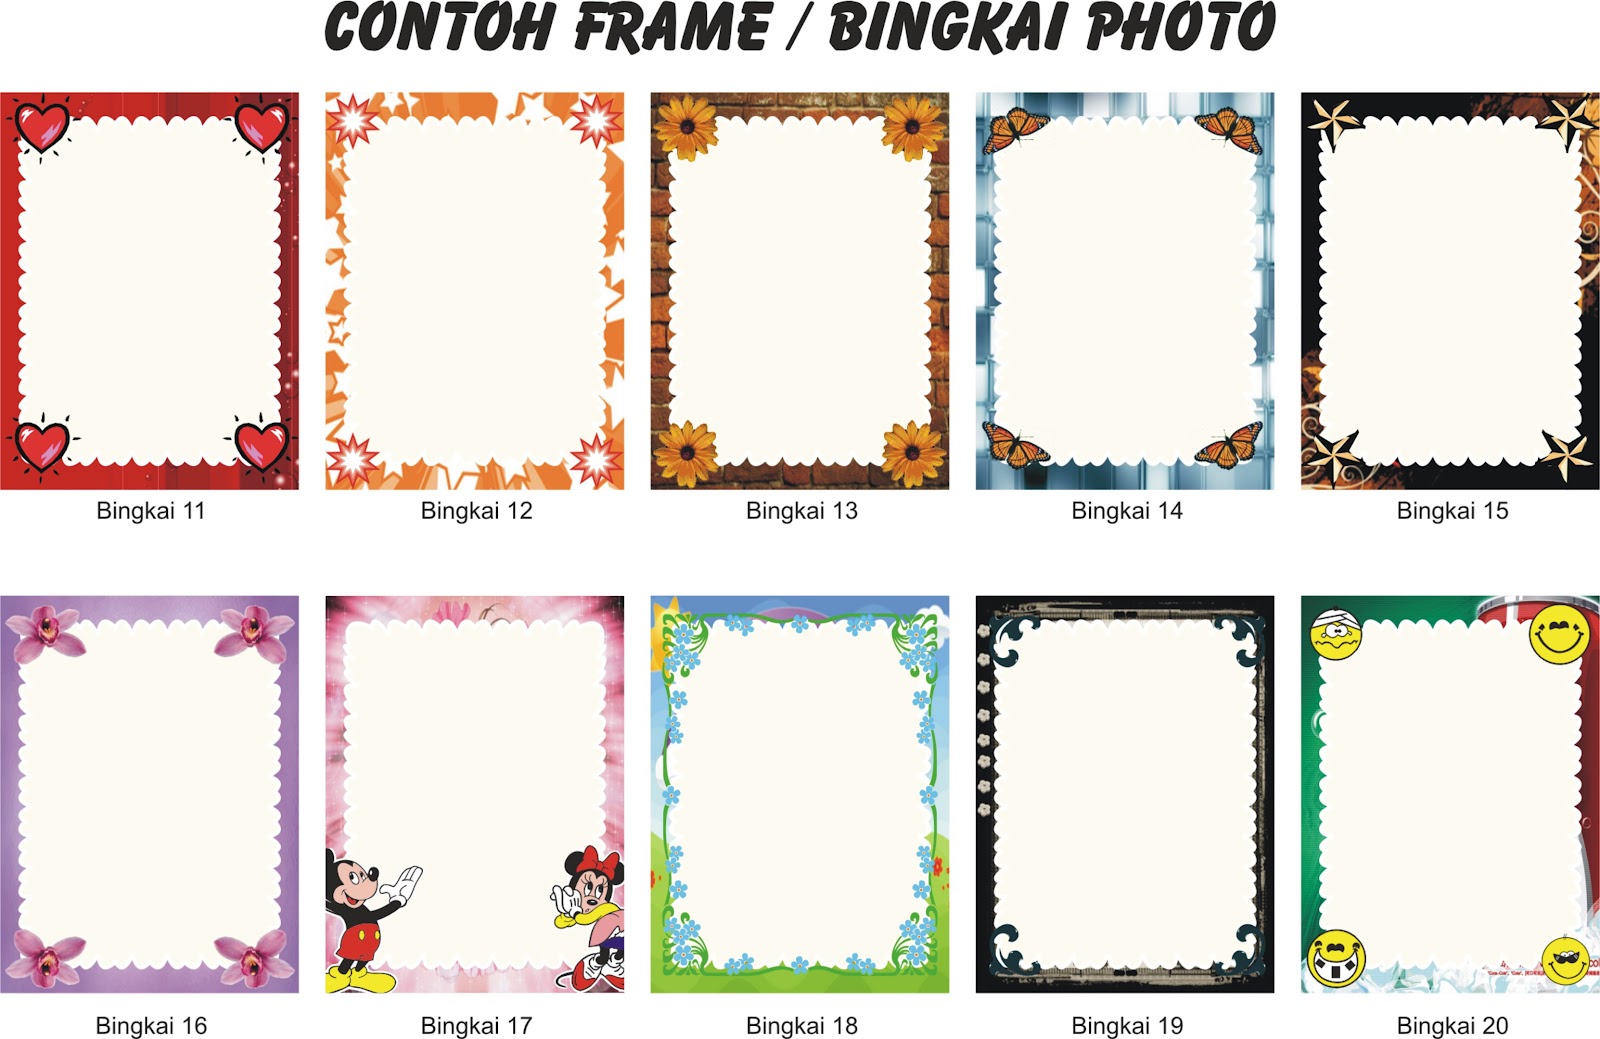 Digital Printing: Contoh Frame/Bingkai Photo